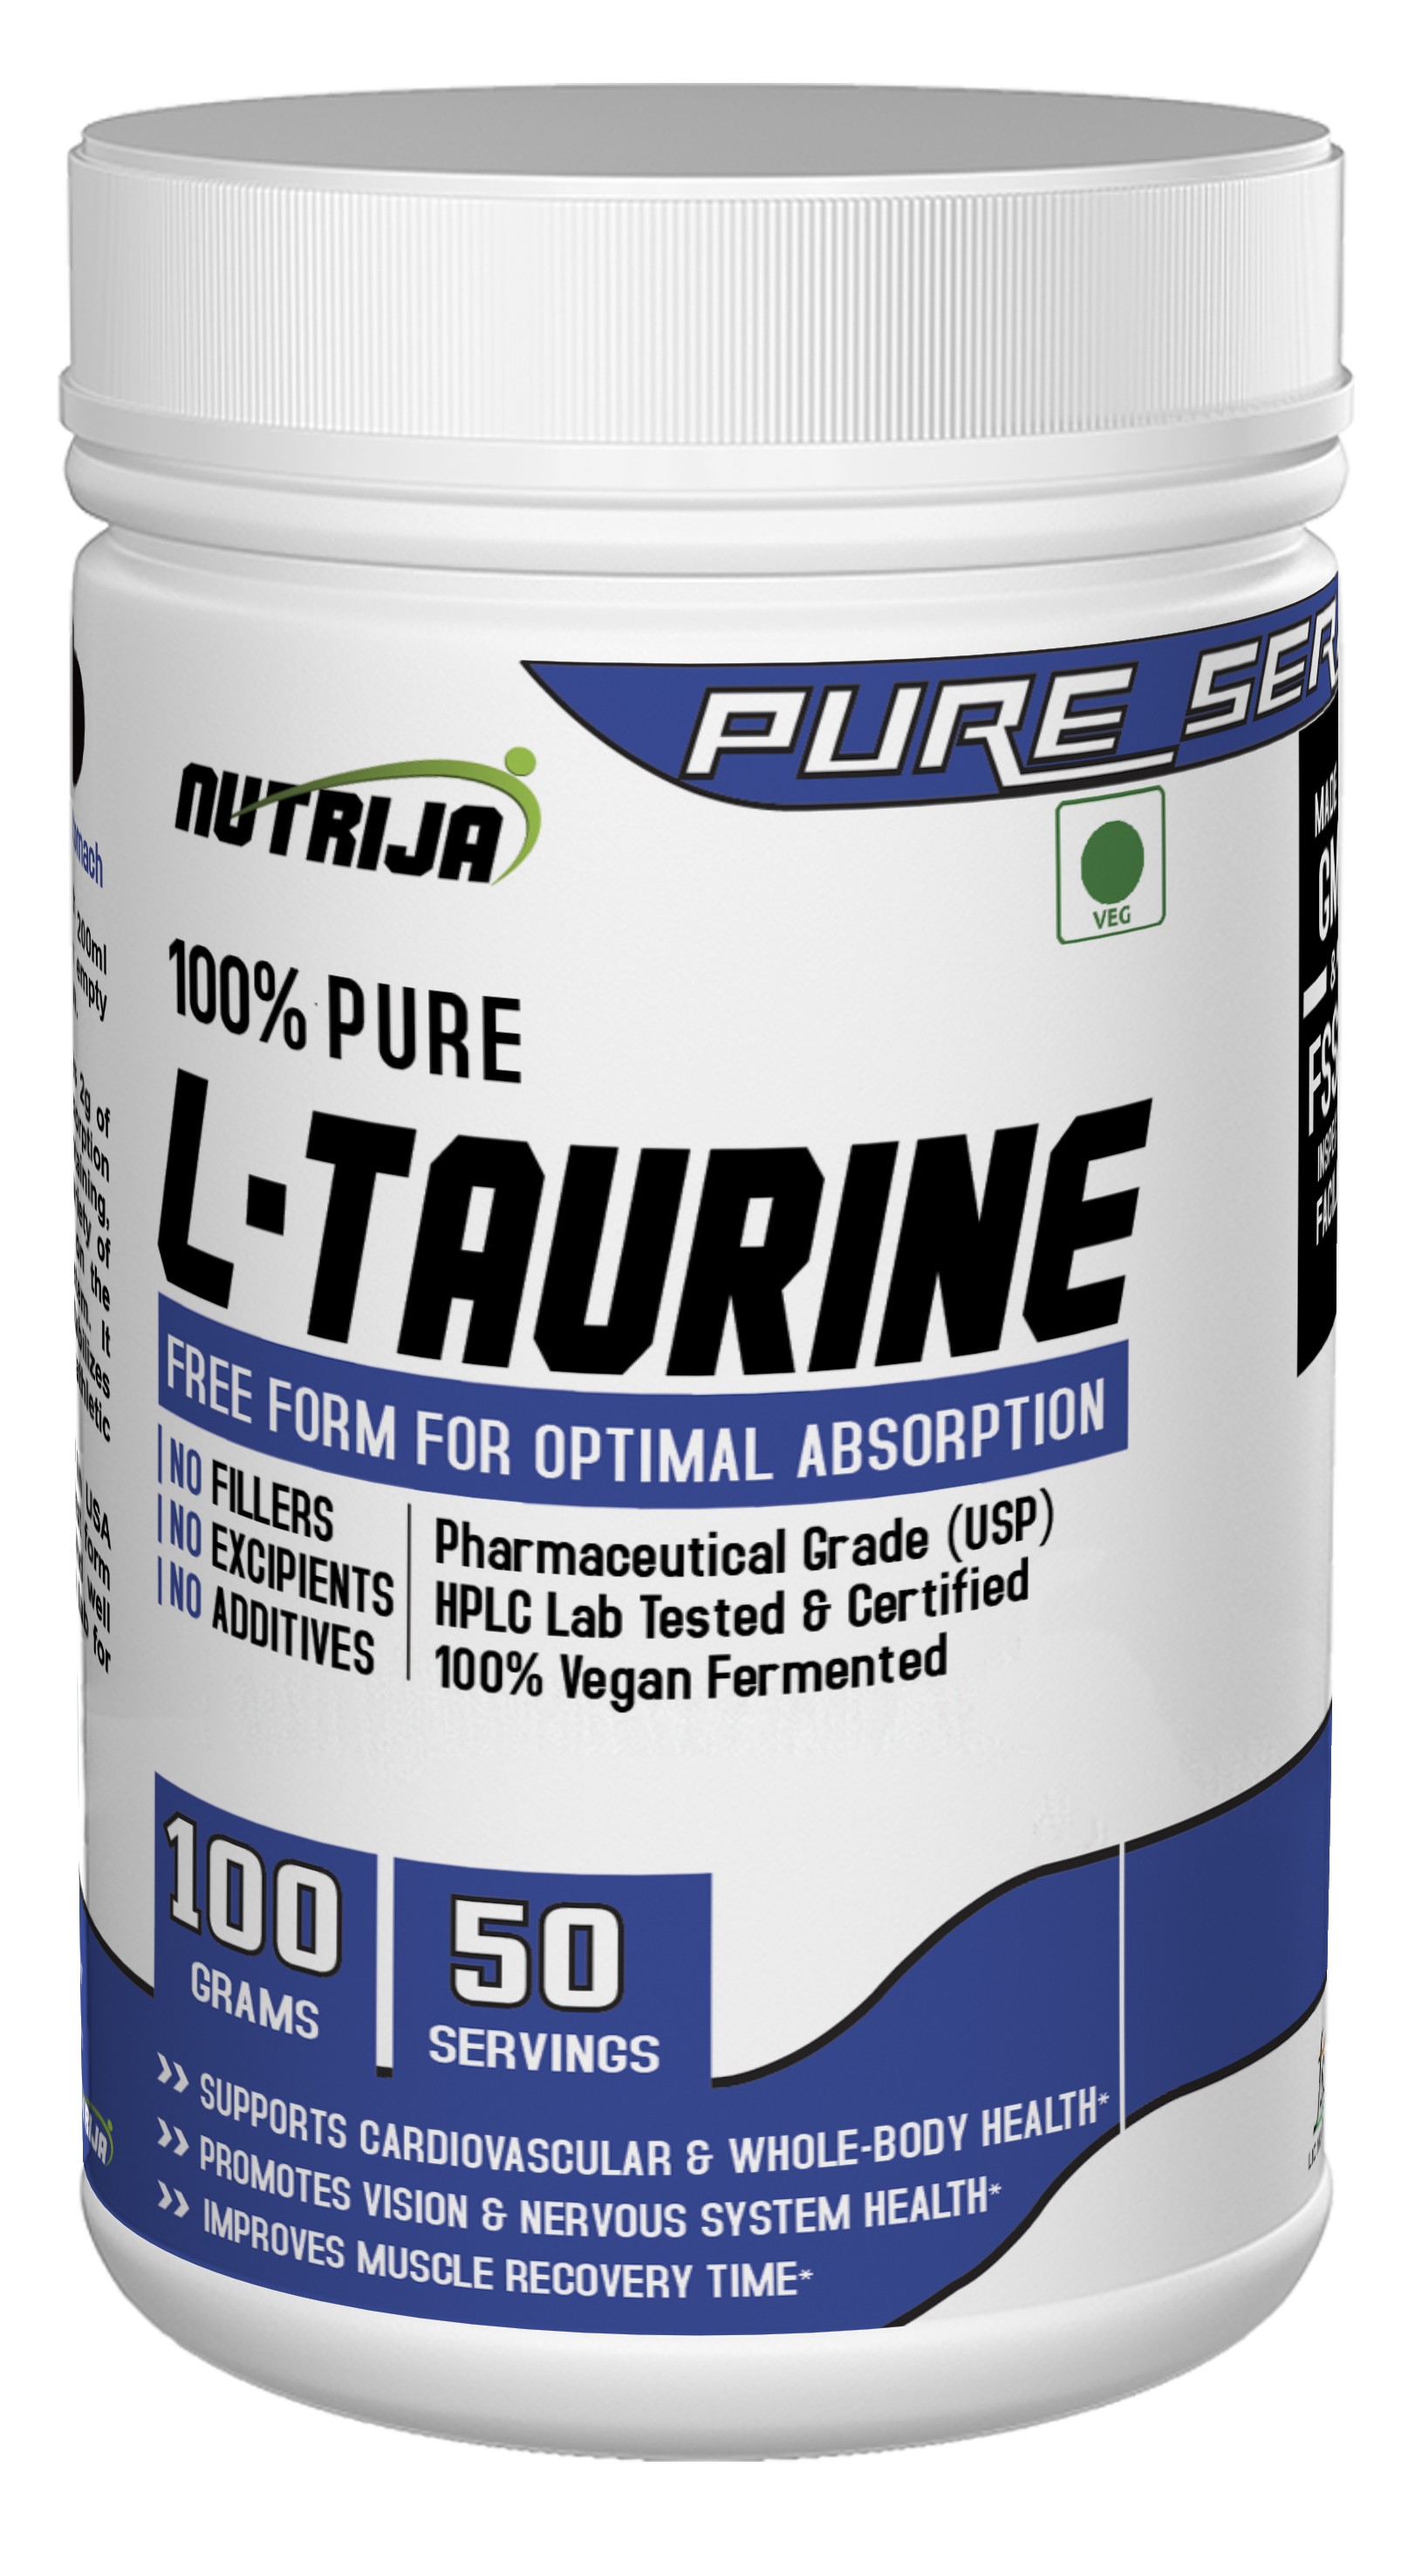 taurine dosage for kids